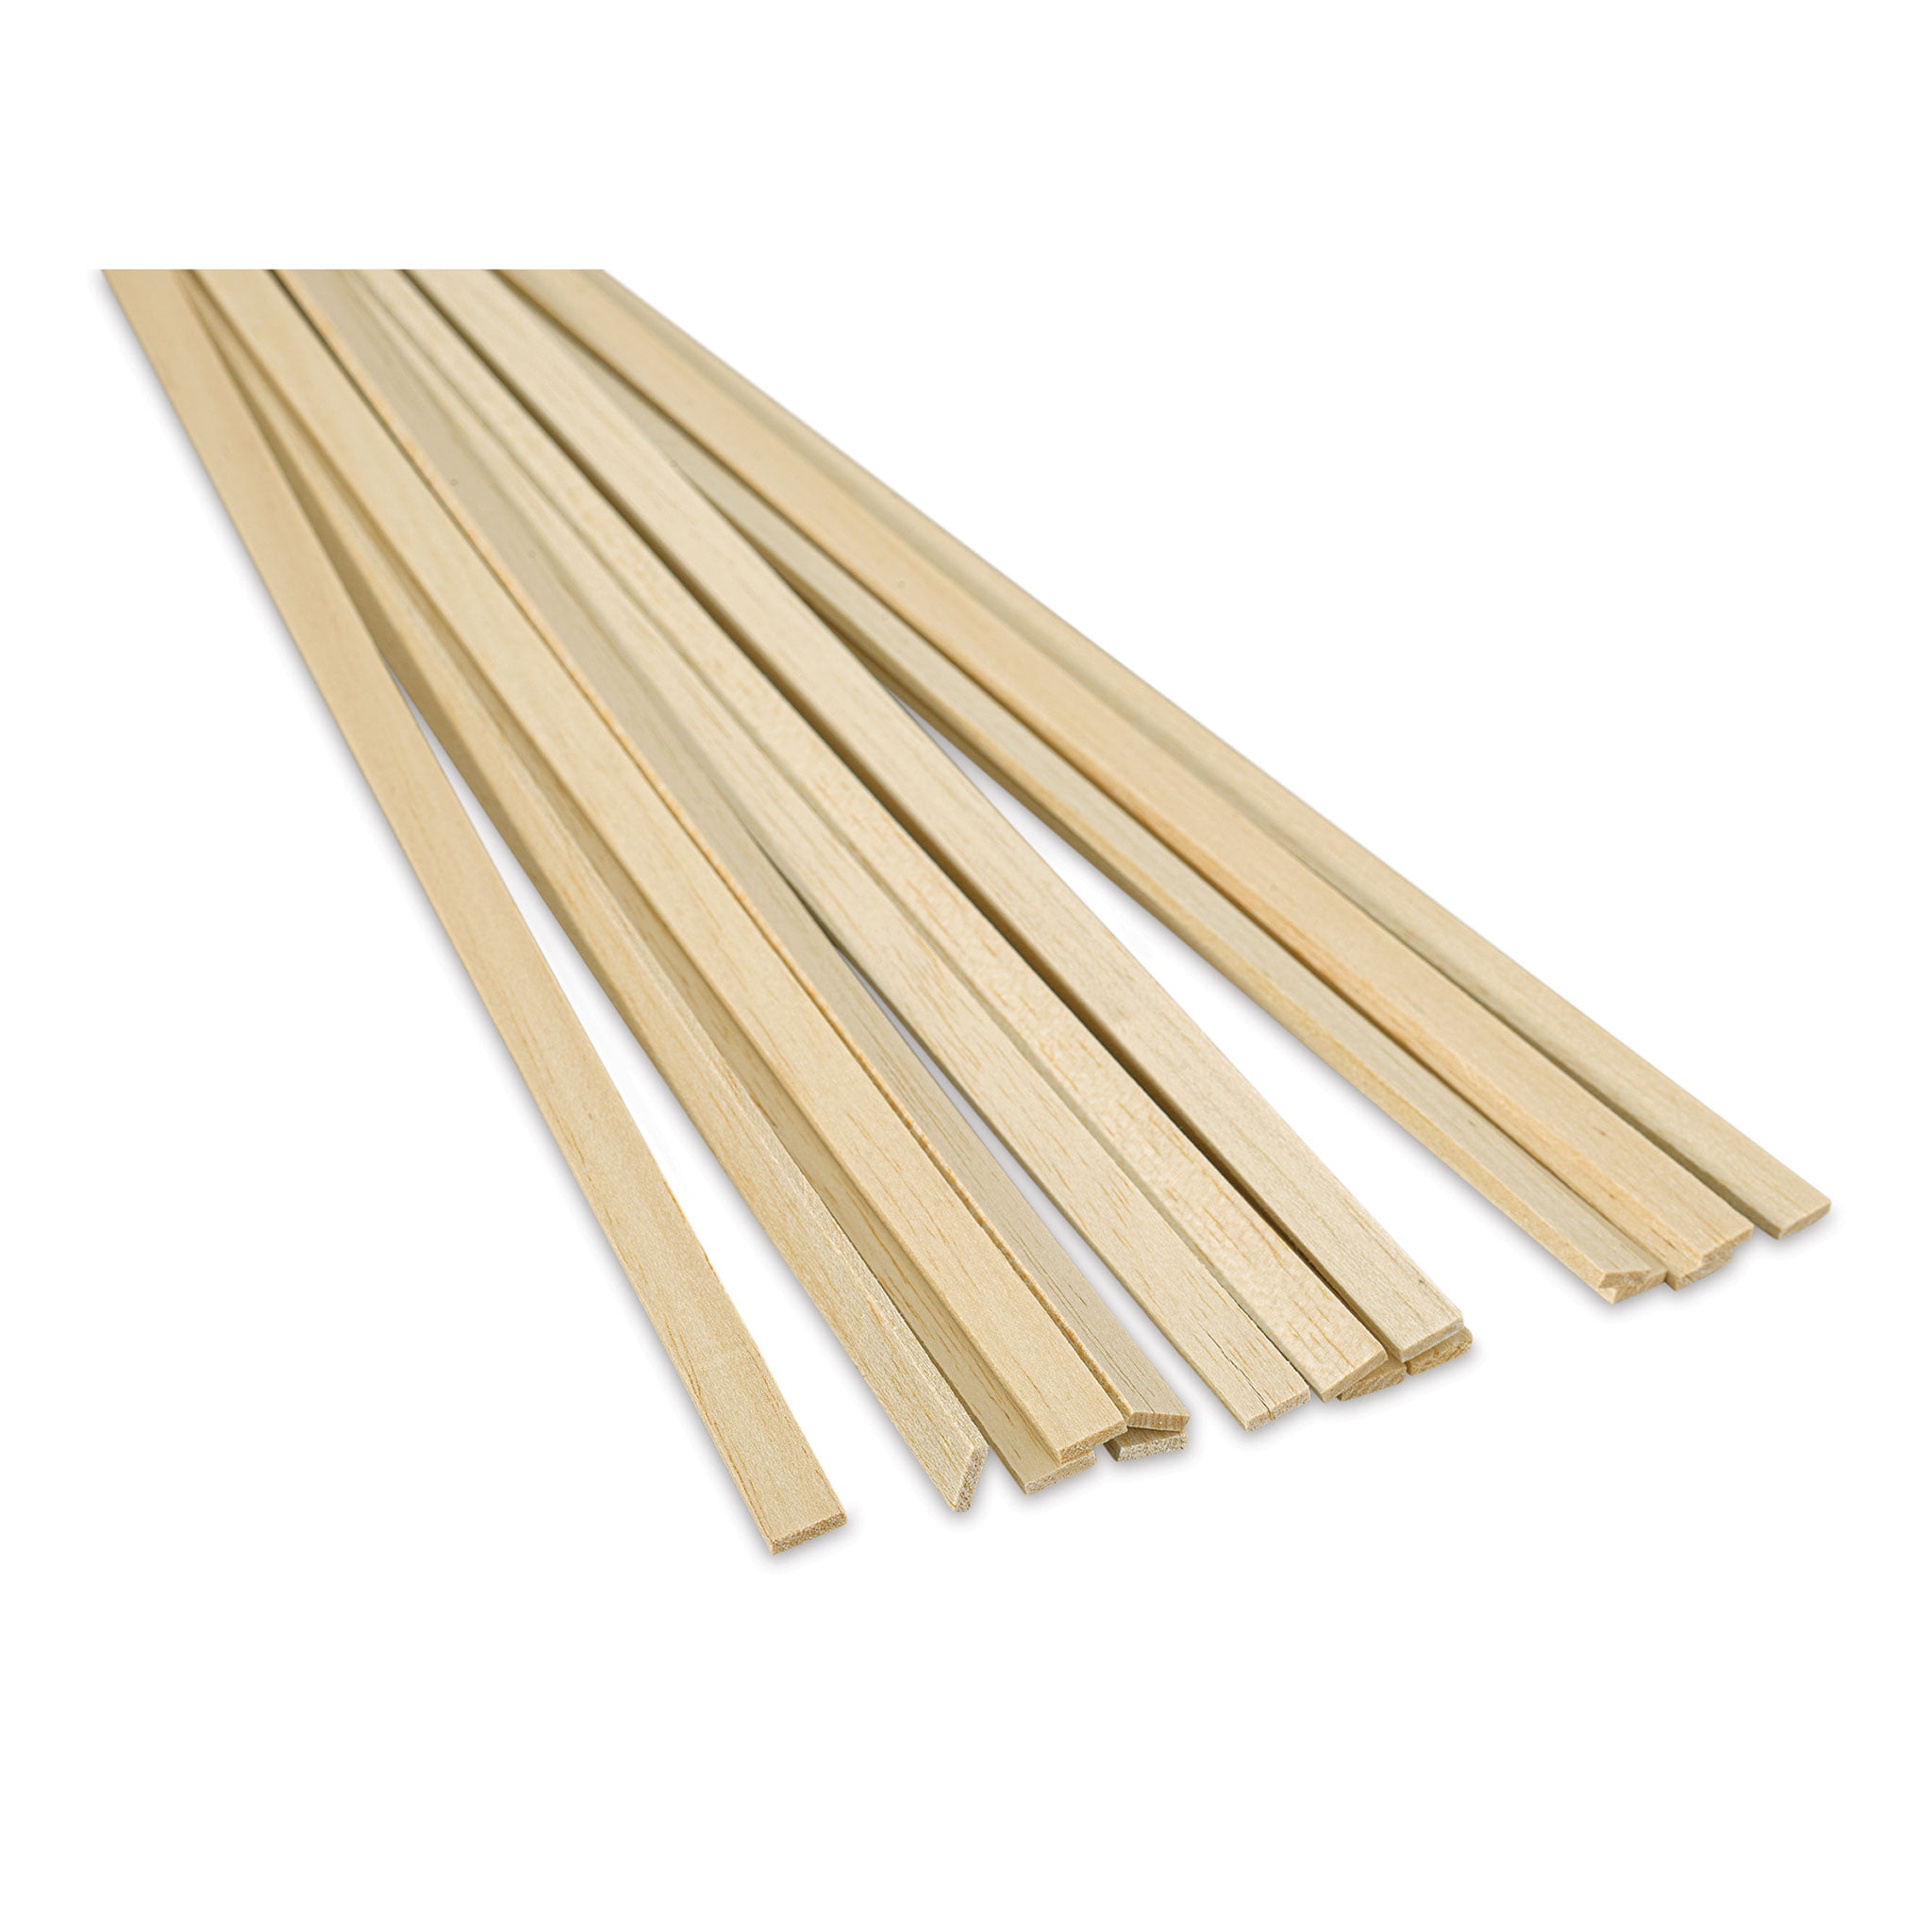 Balsa Wood Sticks 1/2 Inch Square Dowels 12 Long - Pack of 15 by Craftiff  (15 Pcs)